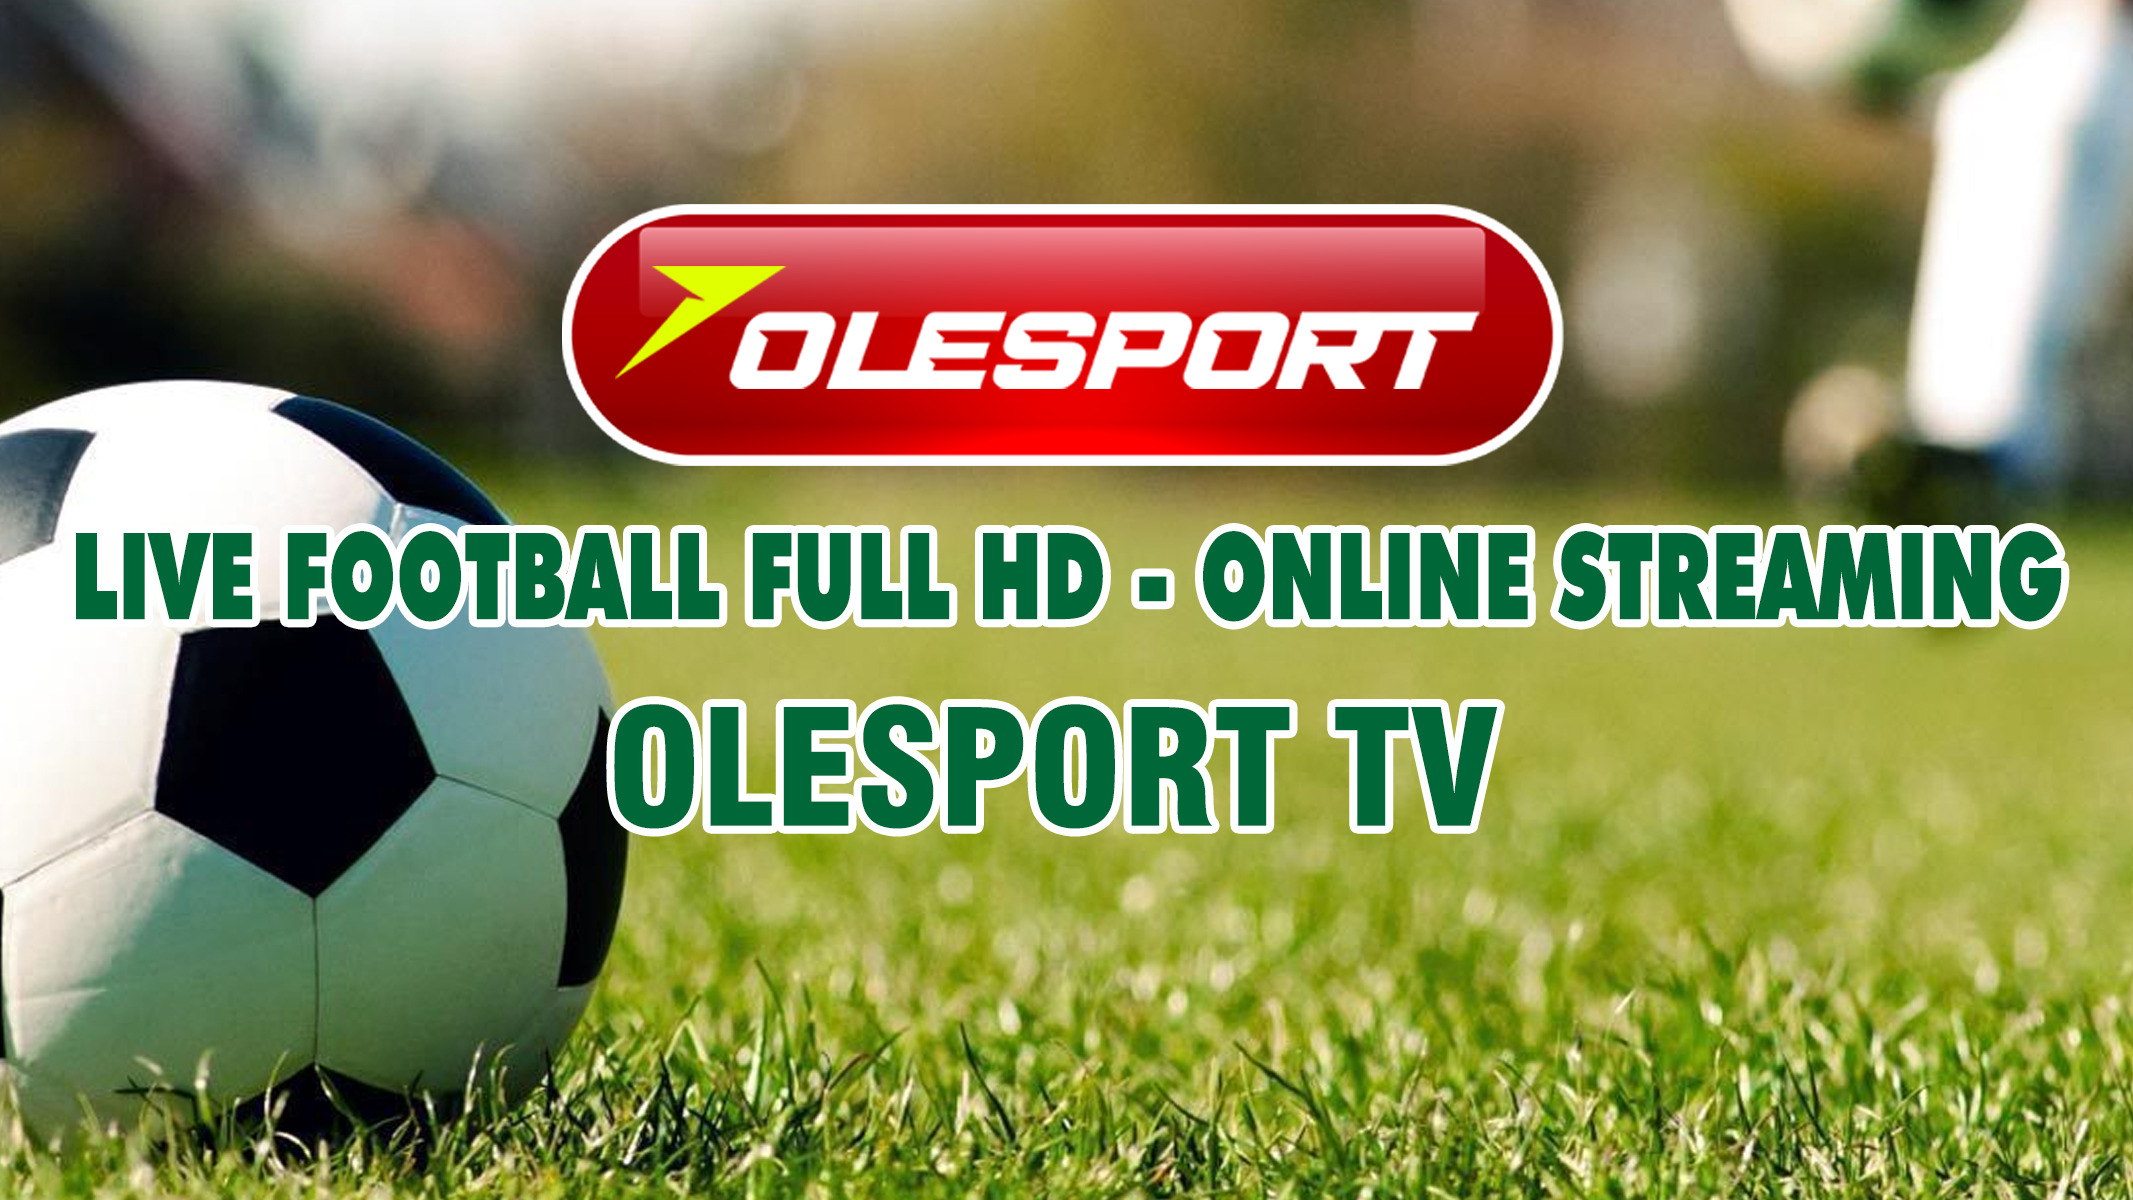 Olesport TV